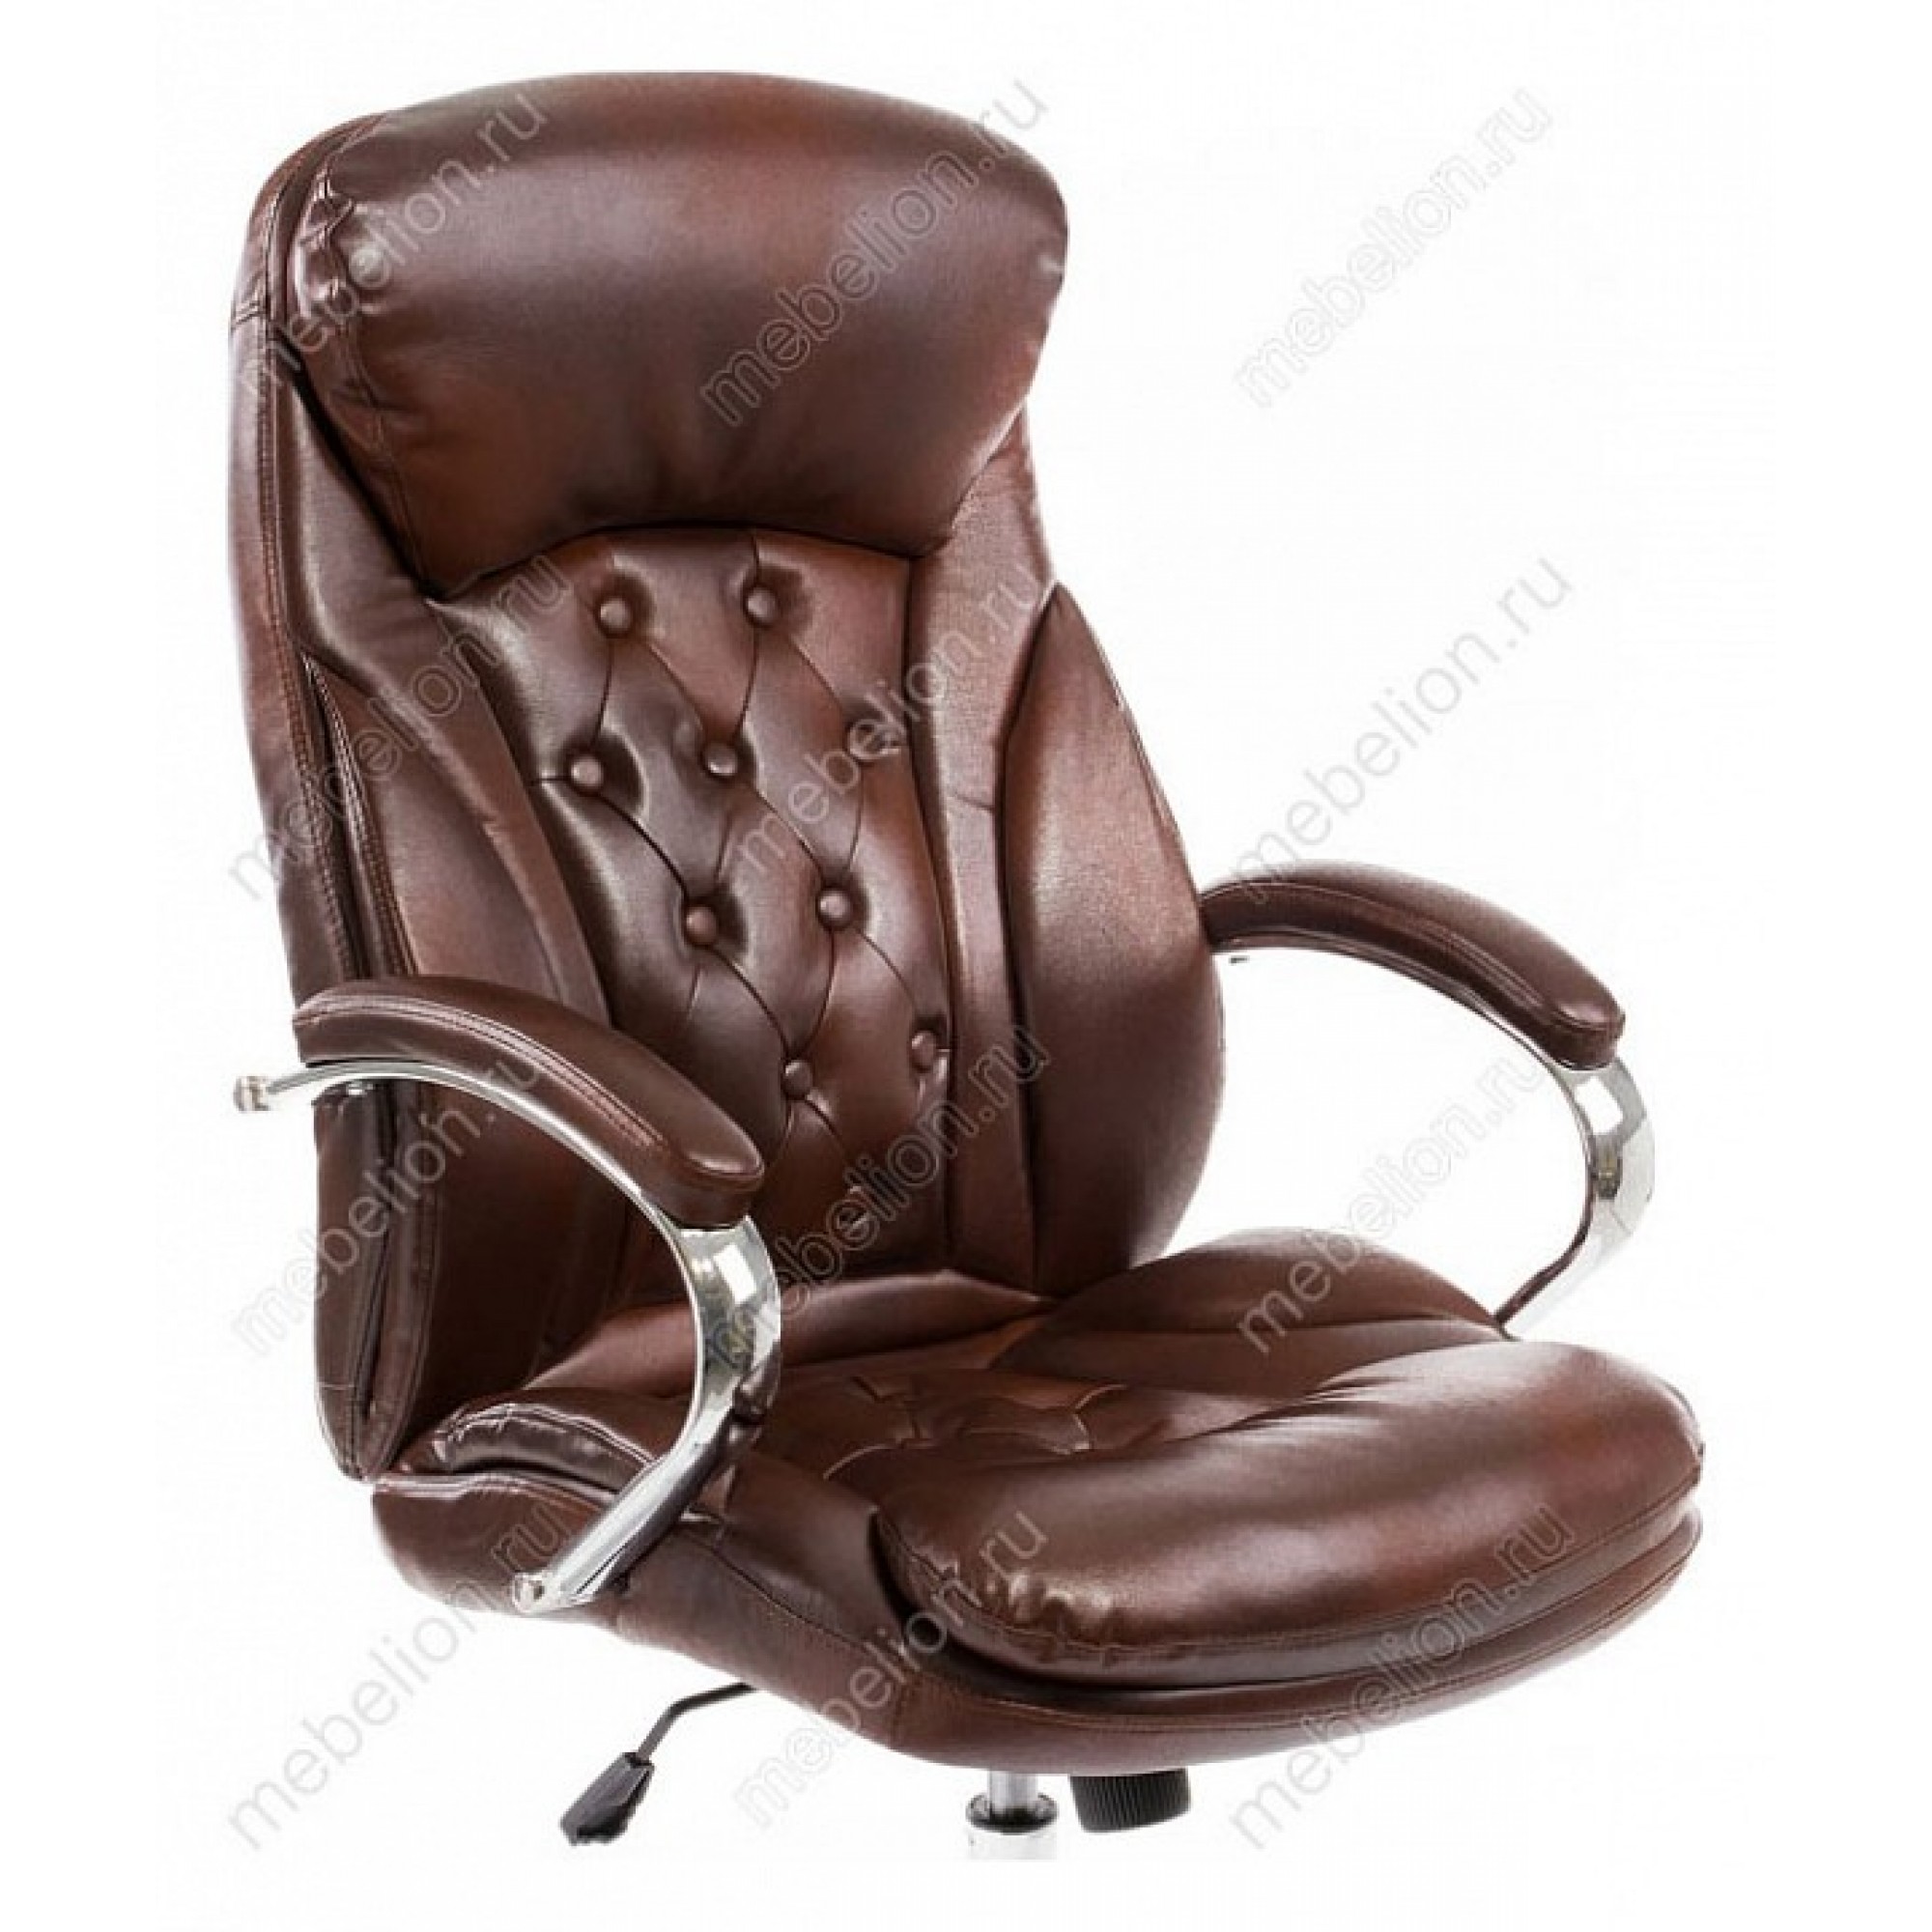 Кресло для руководителя Rich    WO_1869